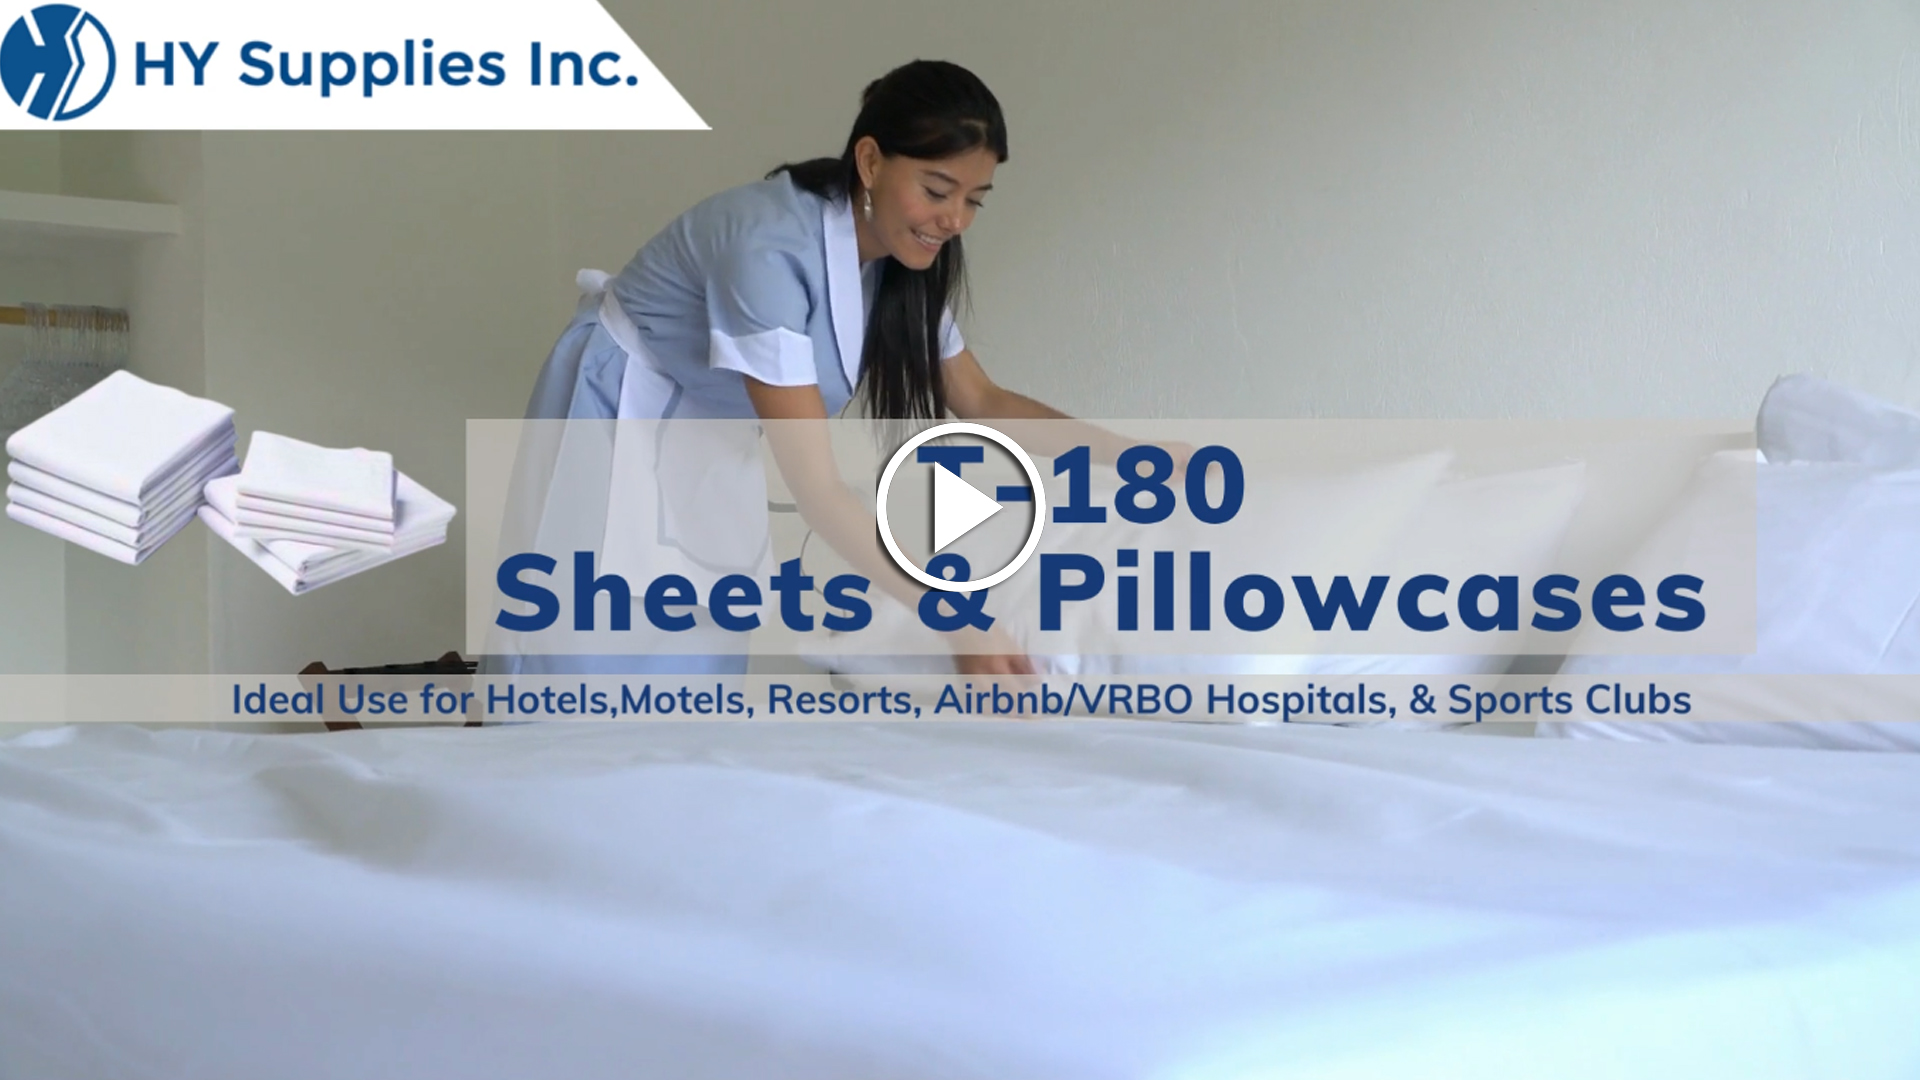 T-180 Sheets & Pillowcases